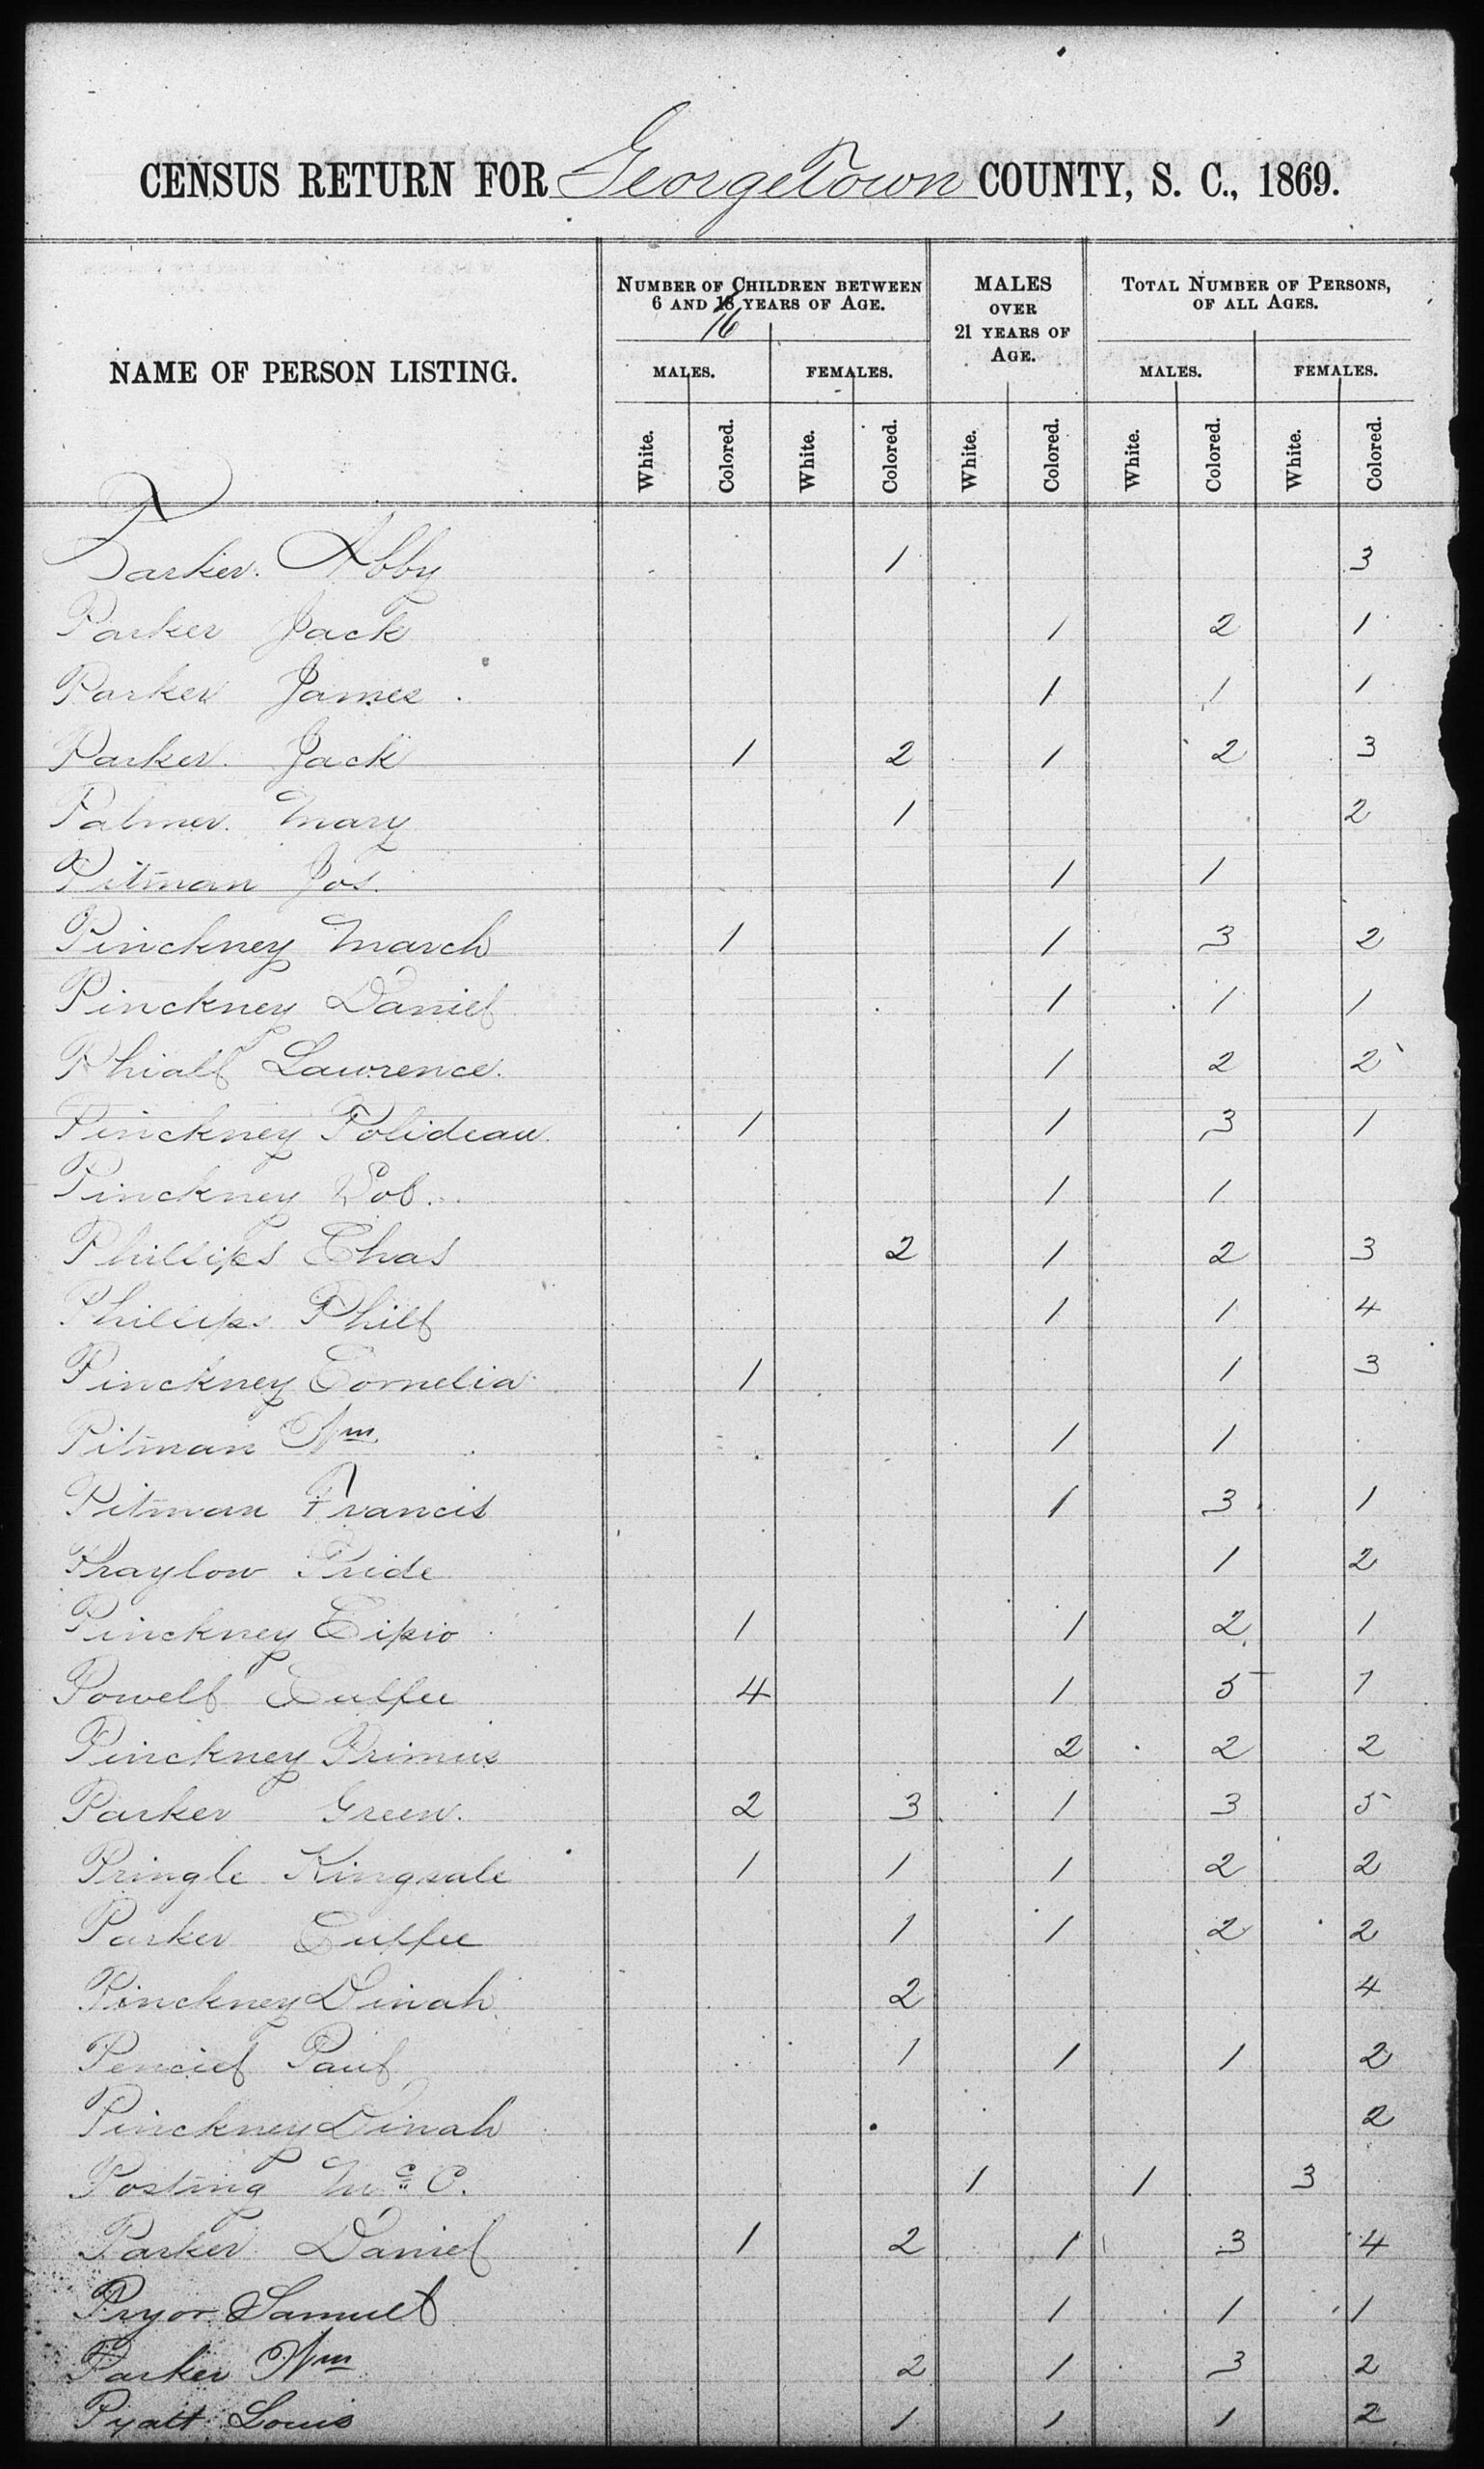 Kingsale Pringle, 1869 South Carolina State Census